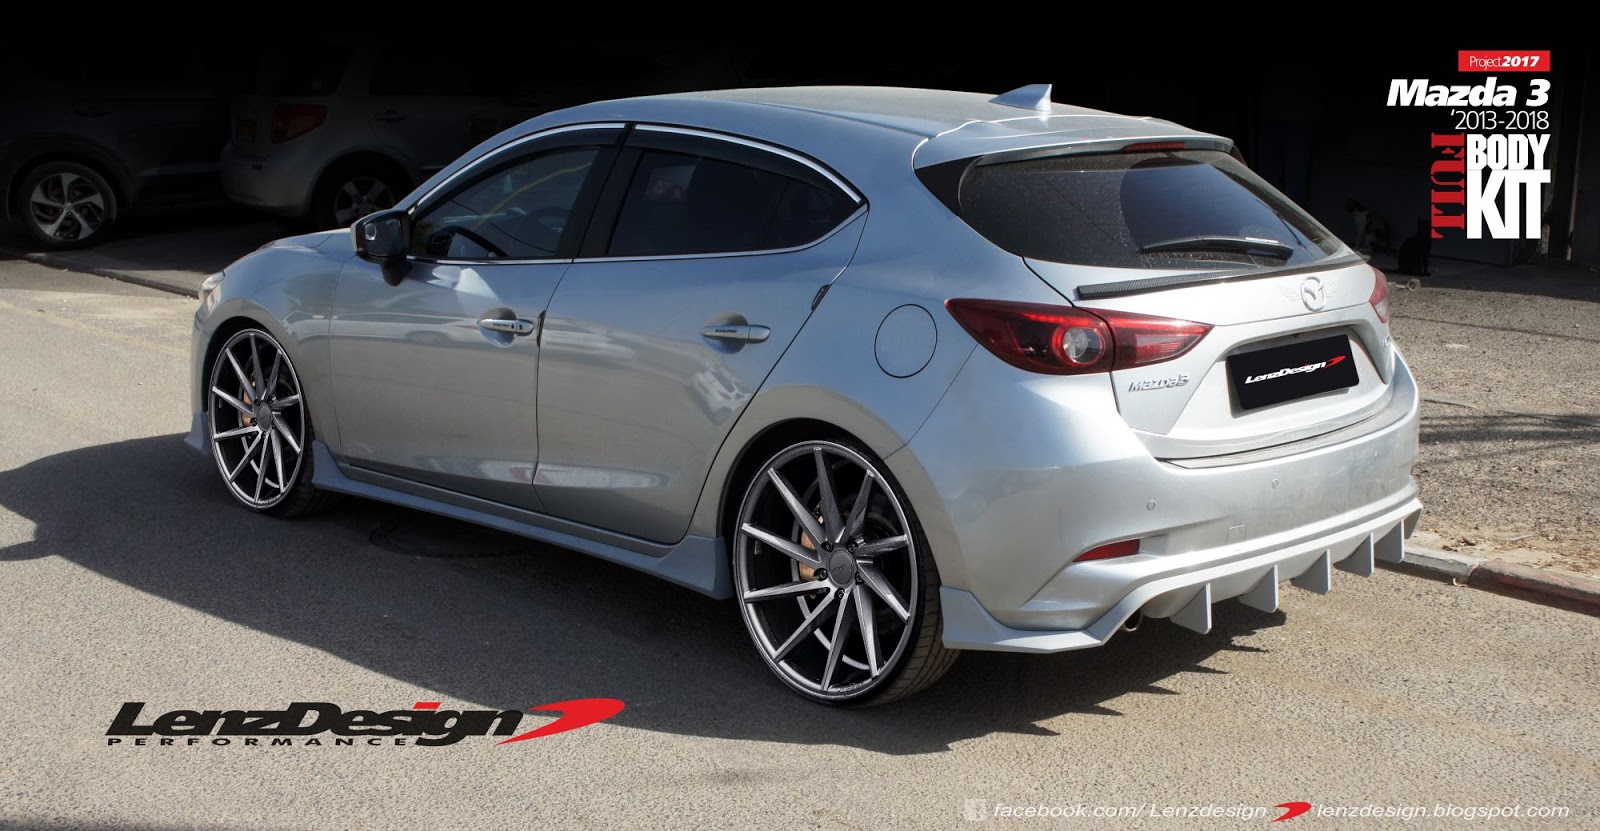 Mazda 3 BM Axela Hatchback Body Kit & Tuning Lenzdesign Performance